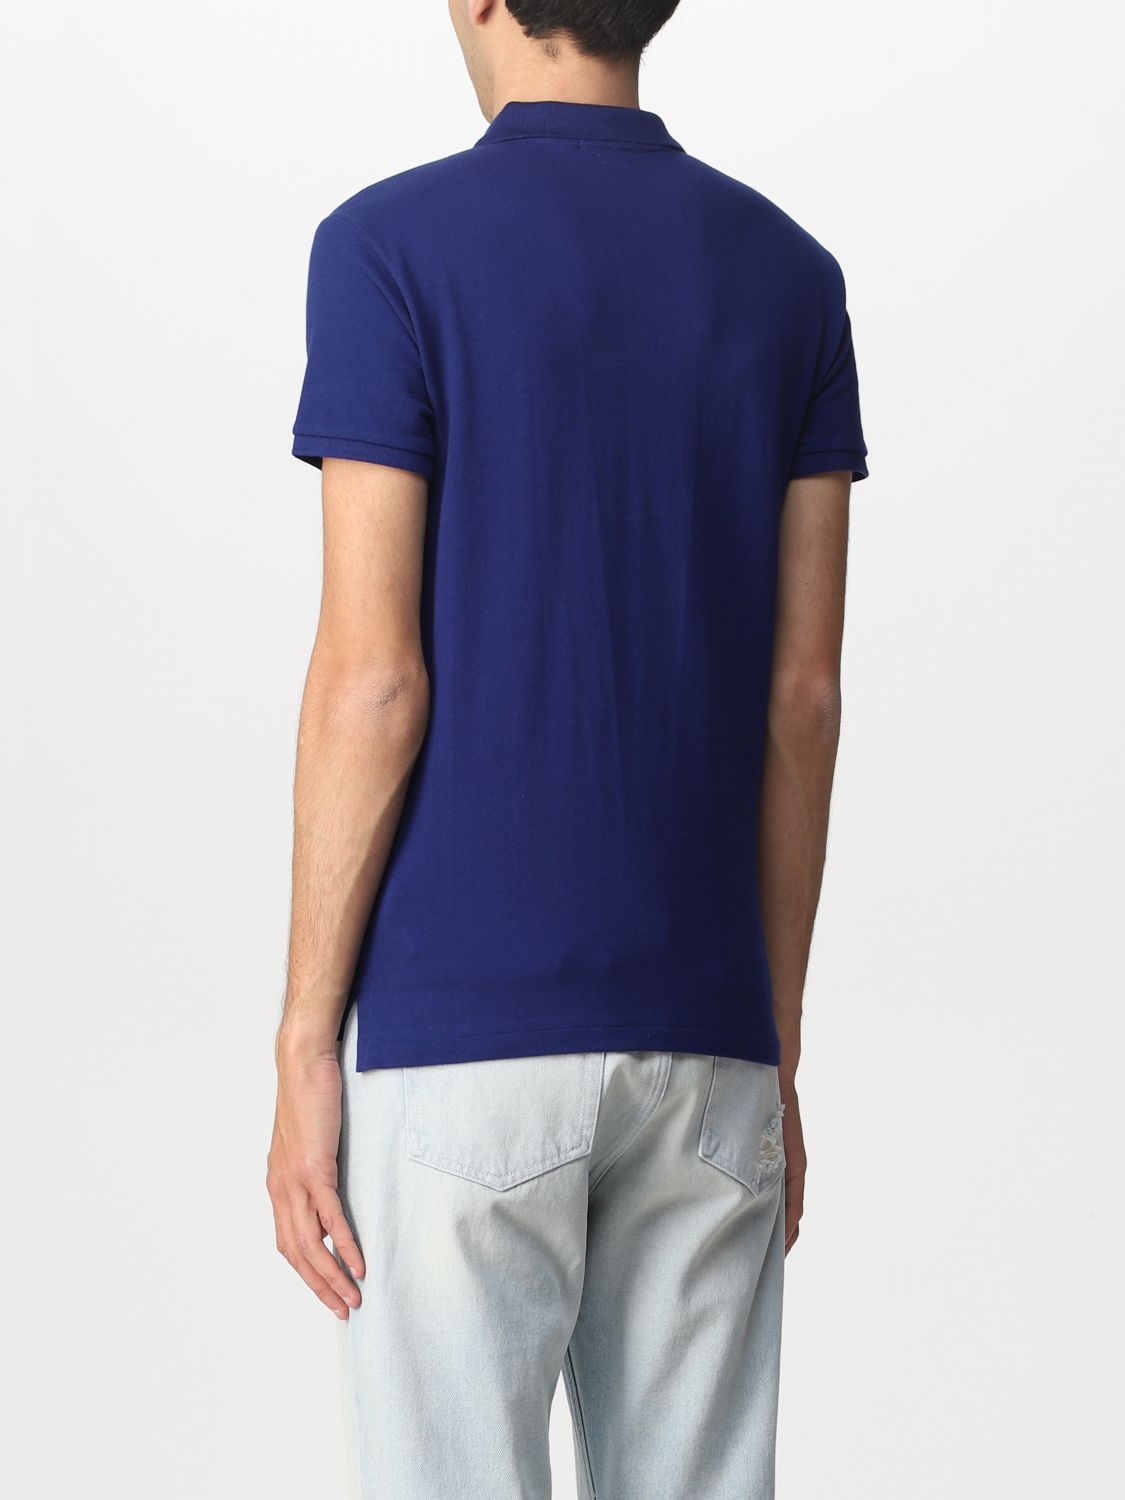 POLO RALPH LAUREN: ポロシャツ メンズ - ブルー 2 | ポロシャツ Polo Ralph Lauren 710795080  GIGLIO.COM